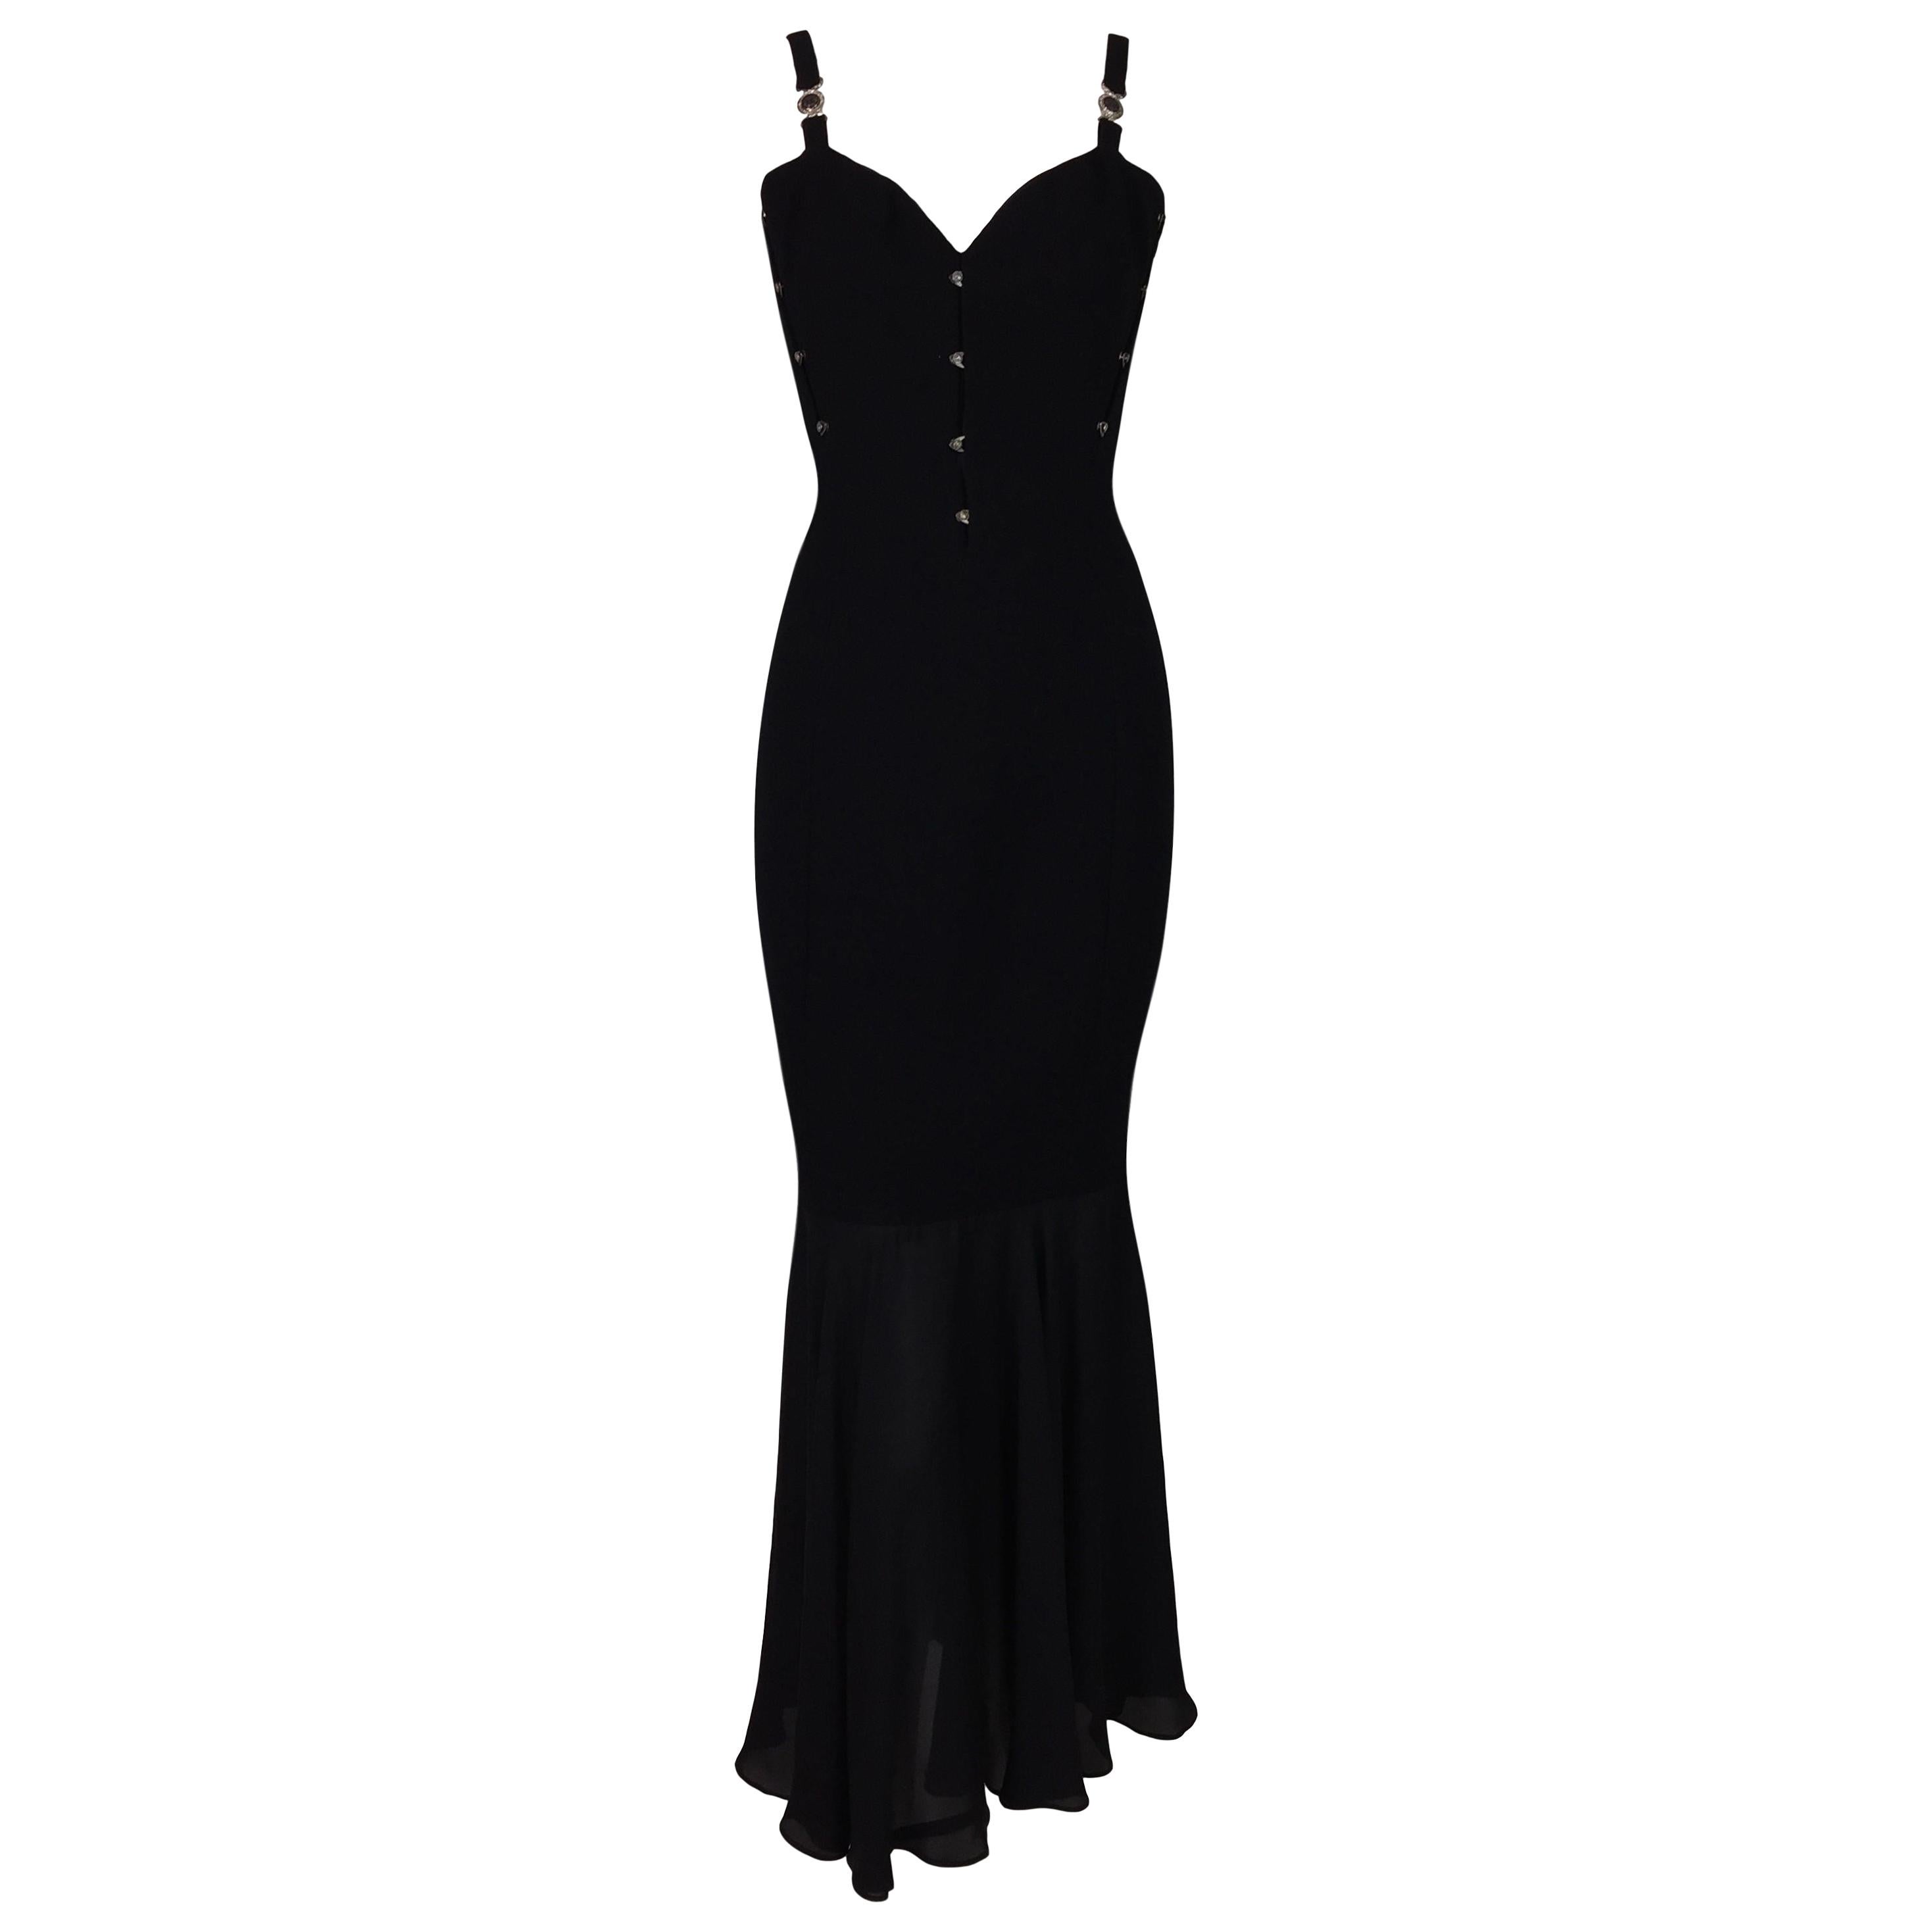 F/W 1995 Gianni Versace Black Mermaid Gown Dress